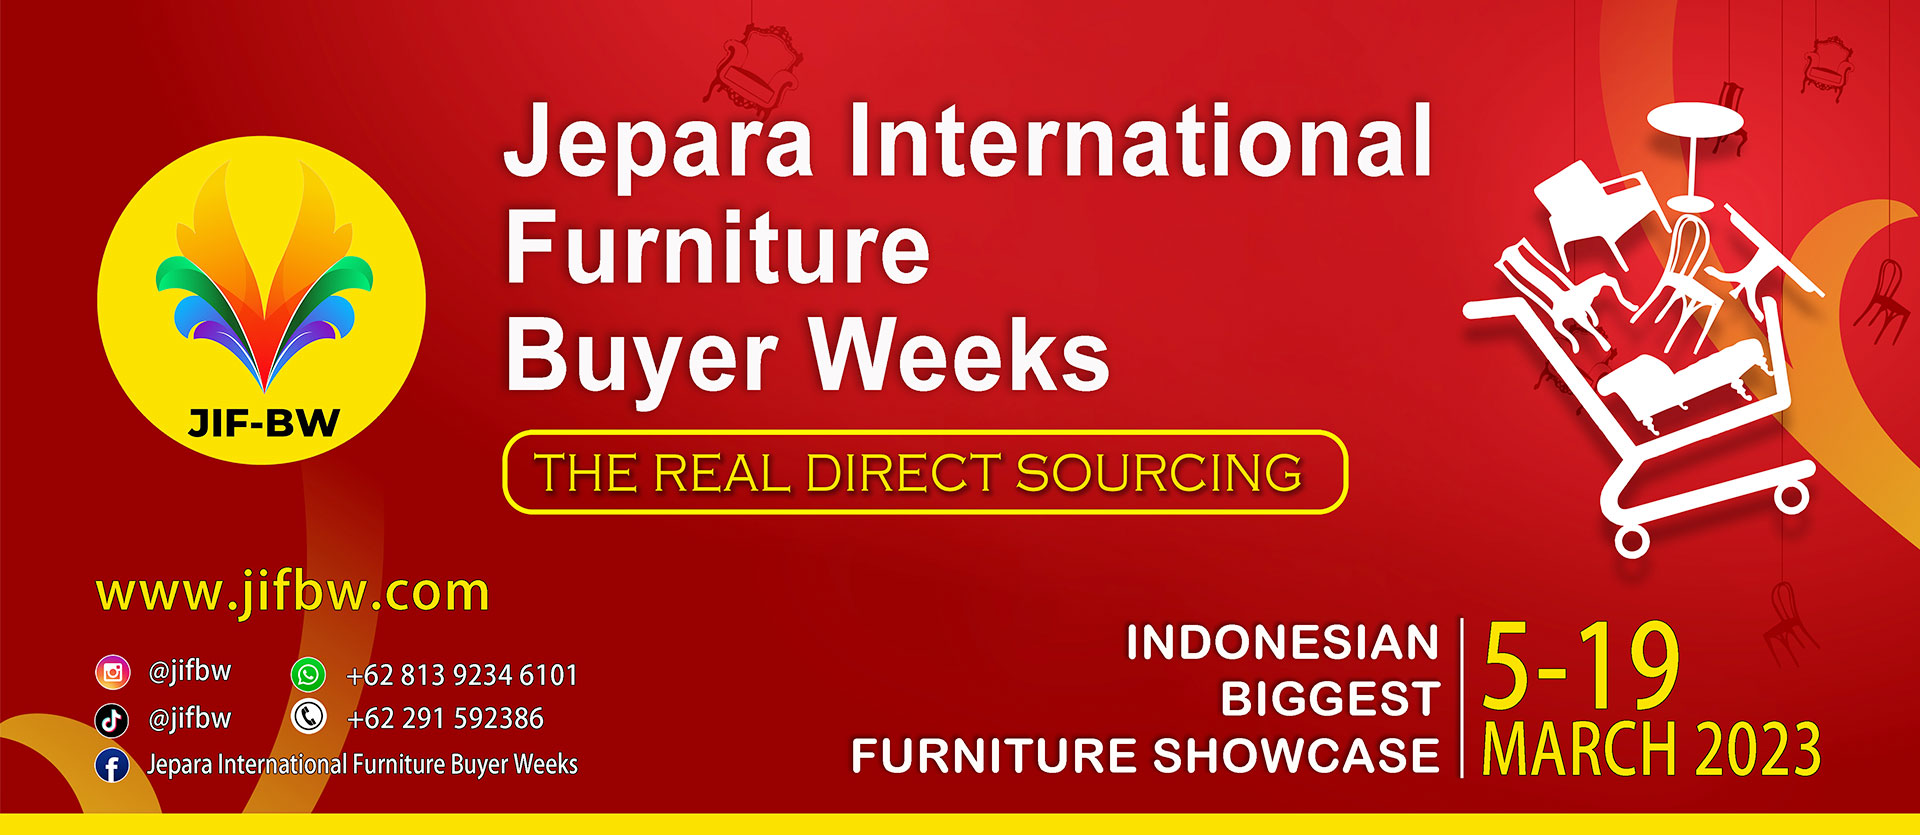 Jepara International Furniture Buyer Weeks